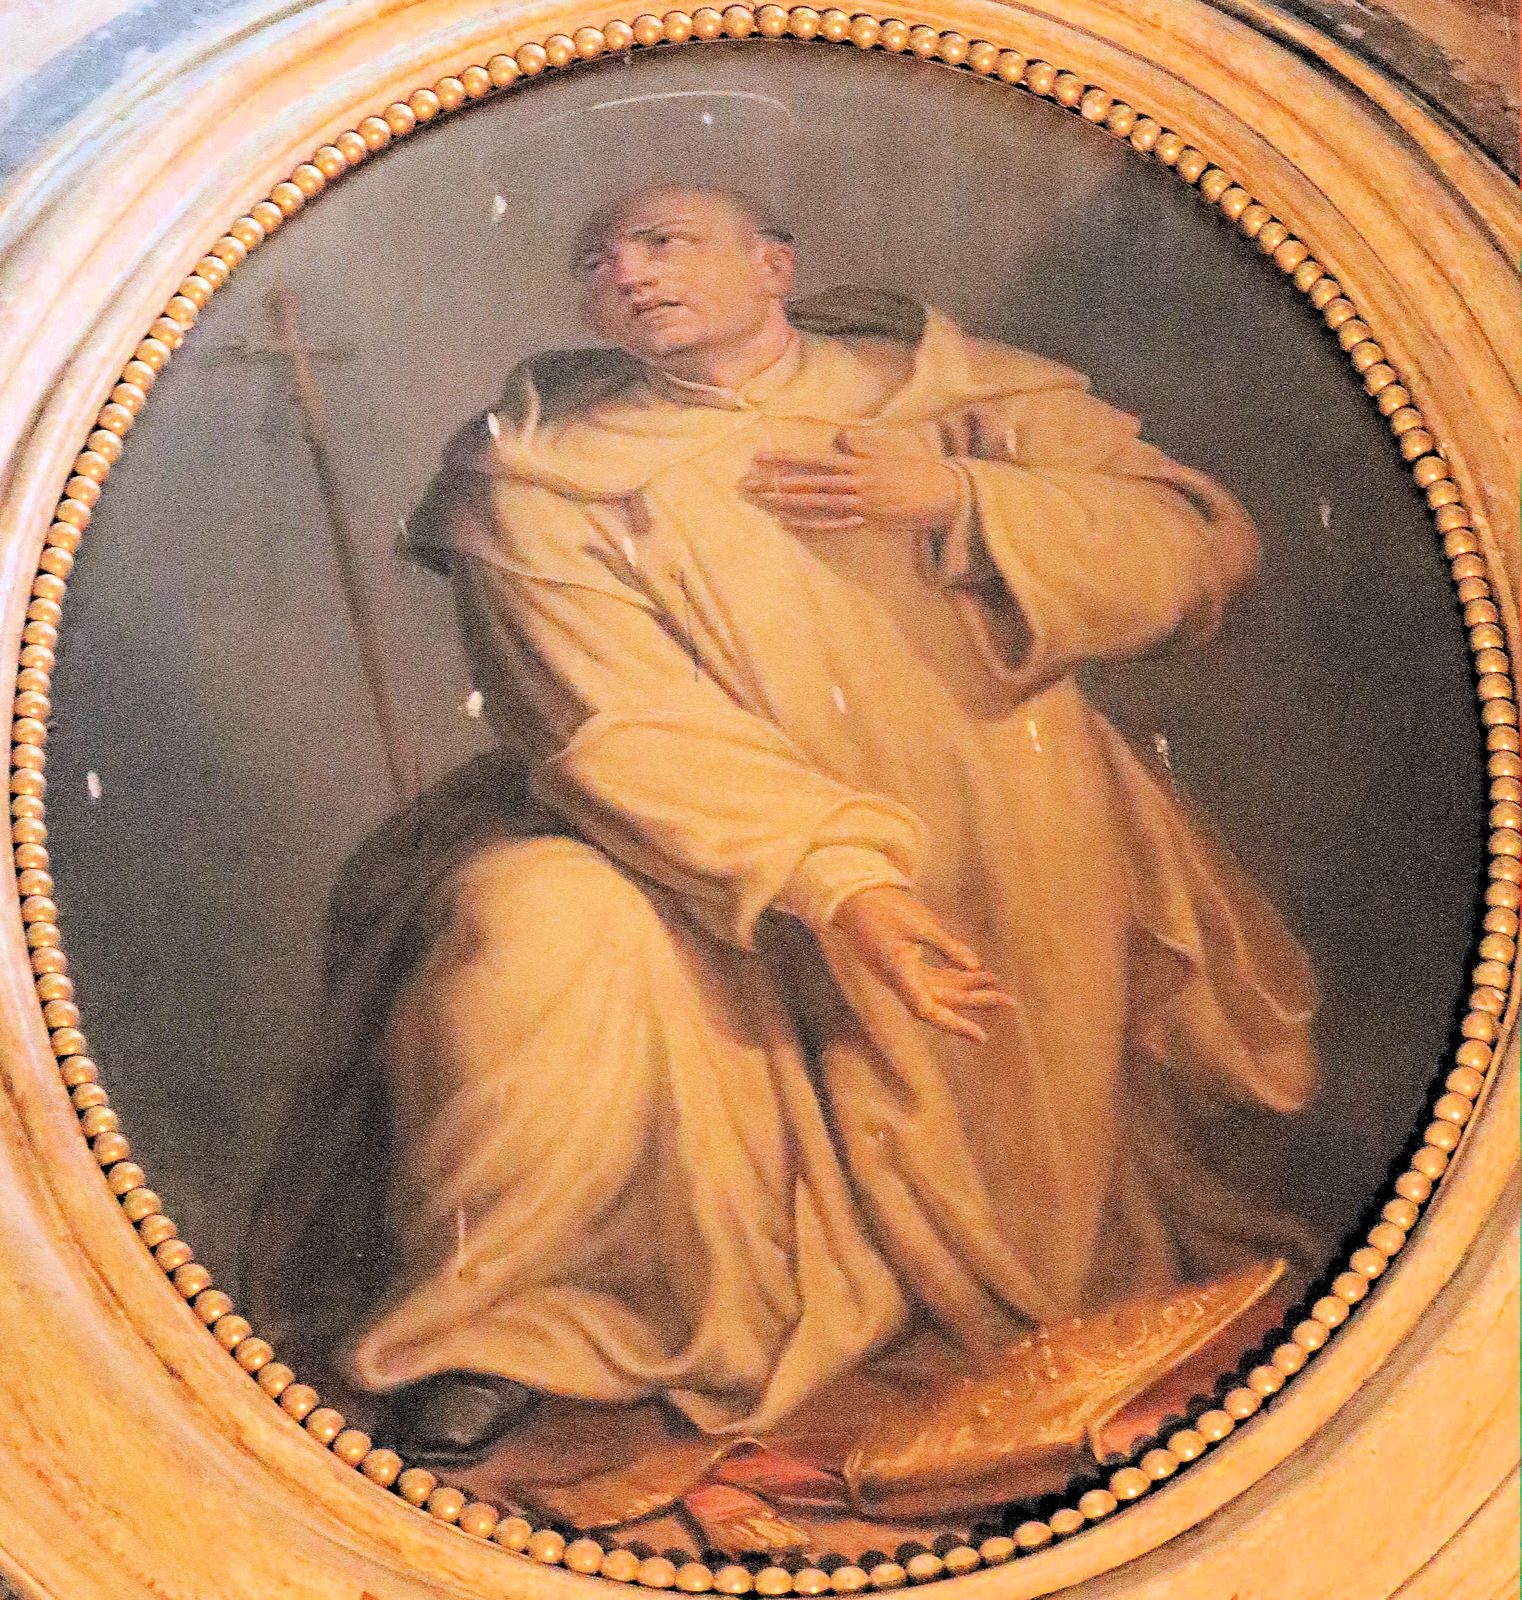 Bild in der Kirche der ehemaligen Kartause San Bartolomeo di Trisulti bei Collepardo nahe Frosinone